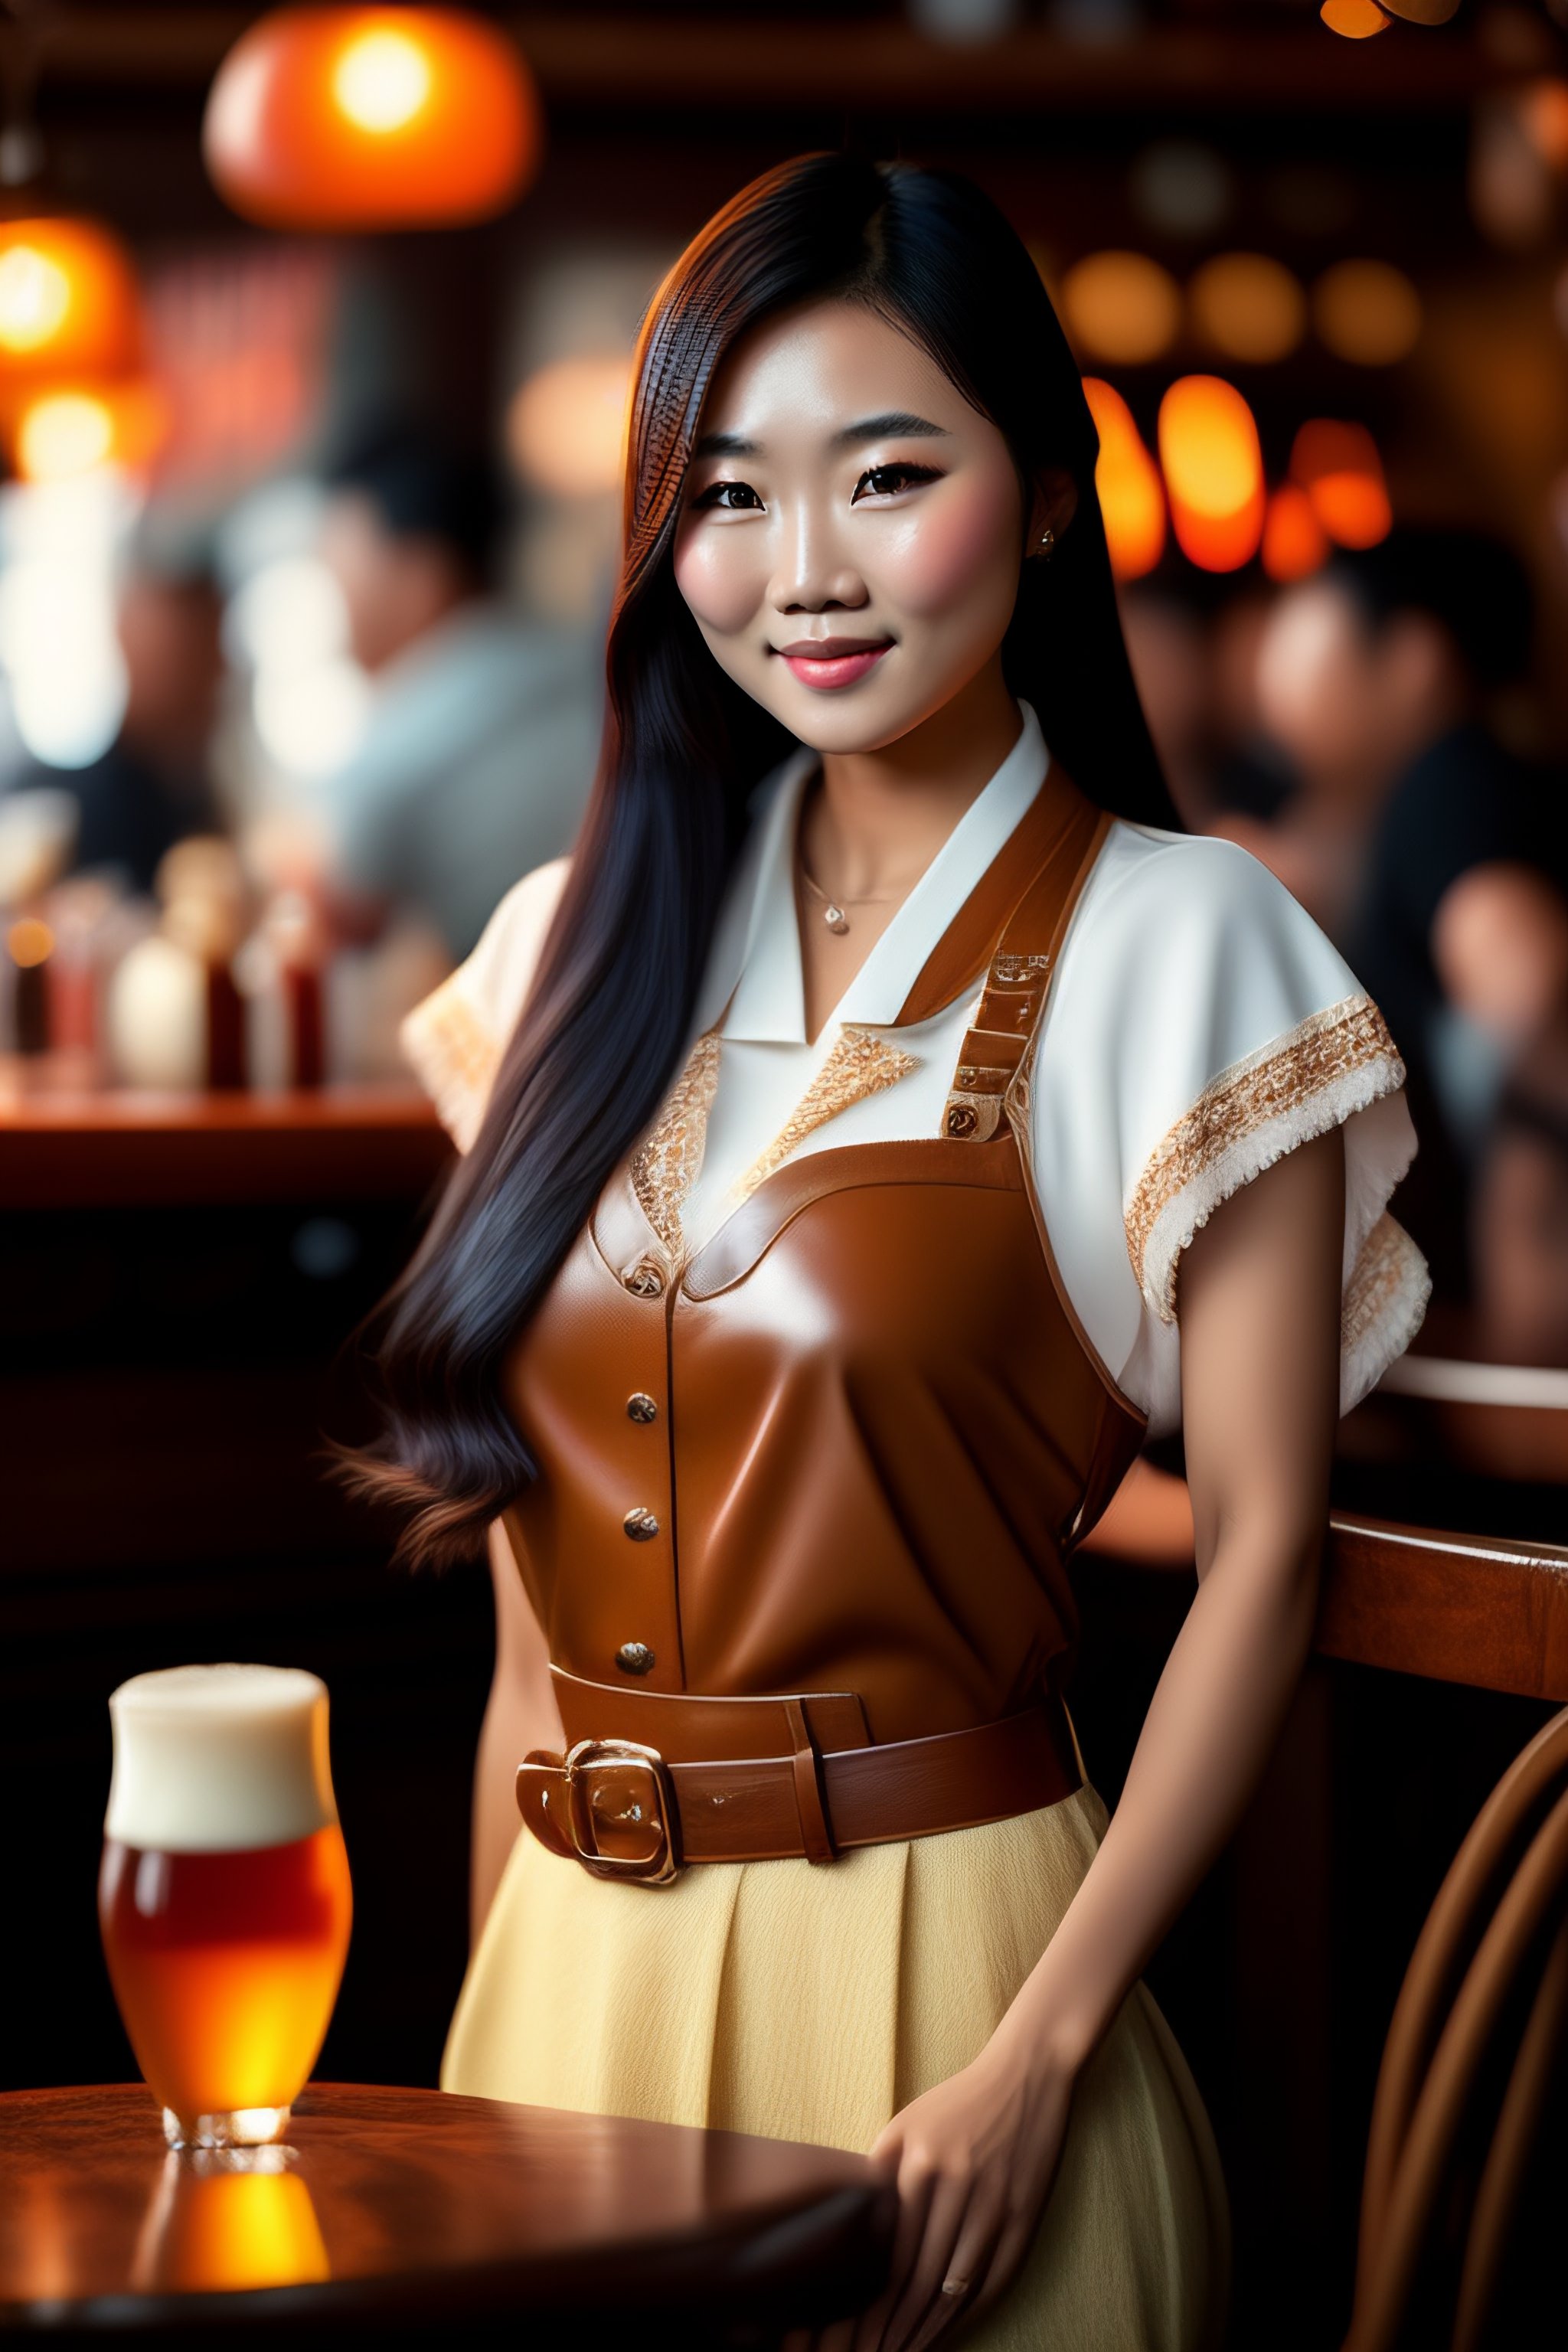 Lexica Cute Girl Pretty Asian Evelyn Lin In A Pub 4k Fine Details Intricate Cluttered